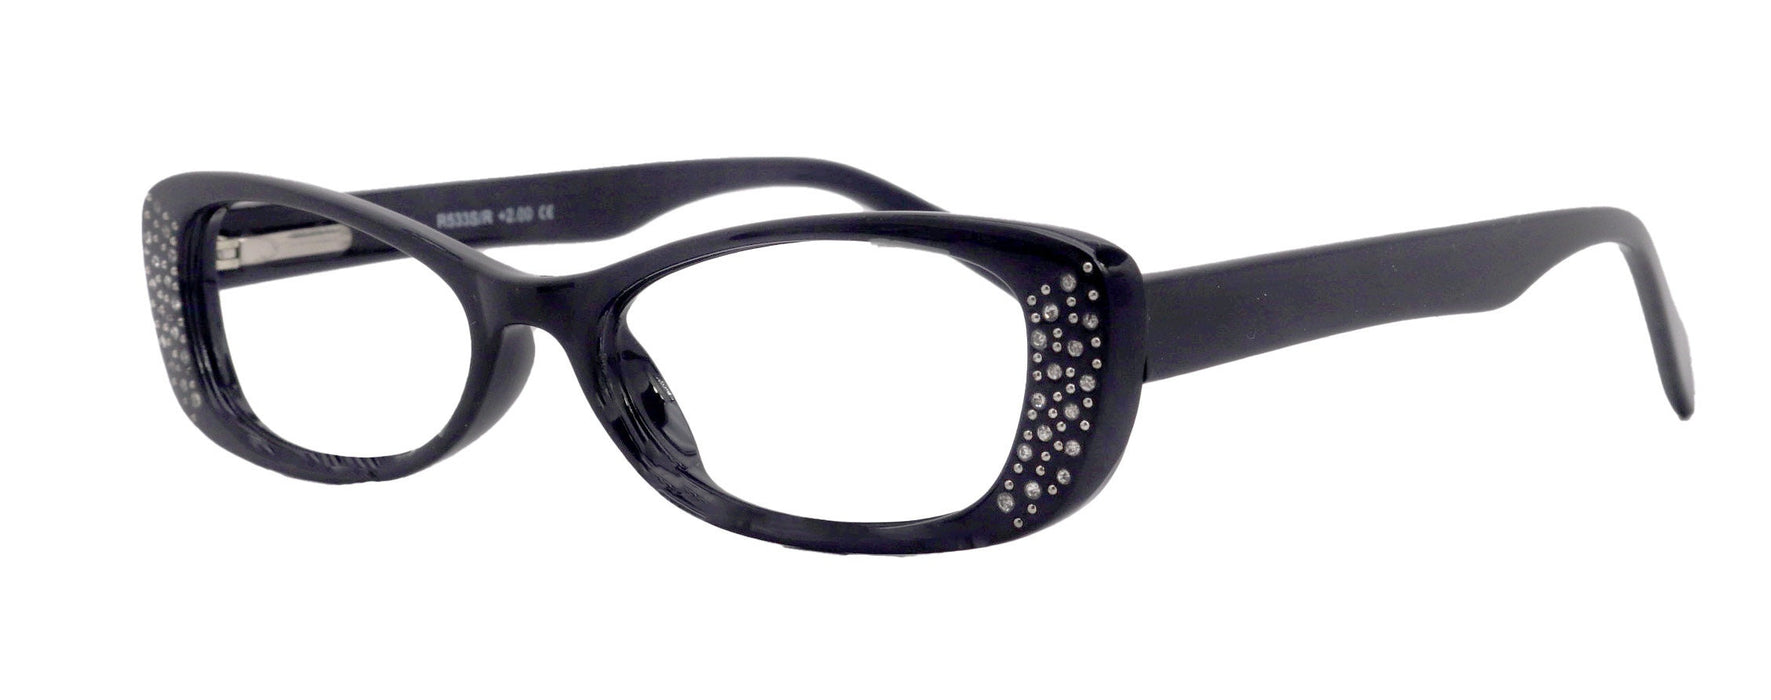 Premium Reading Glasses High End Reading Glass, Small Frame Black +1.25 to +3.00 magnifying glasses, Cat Eye. optical Frames